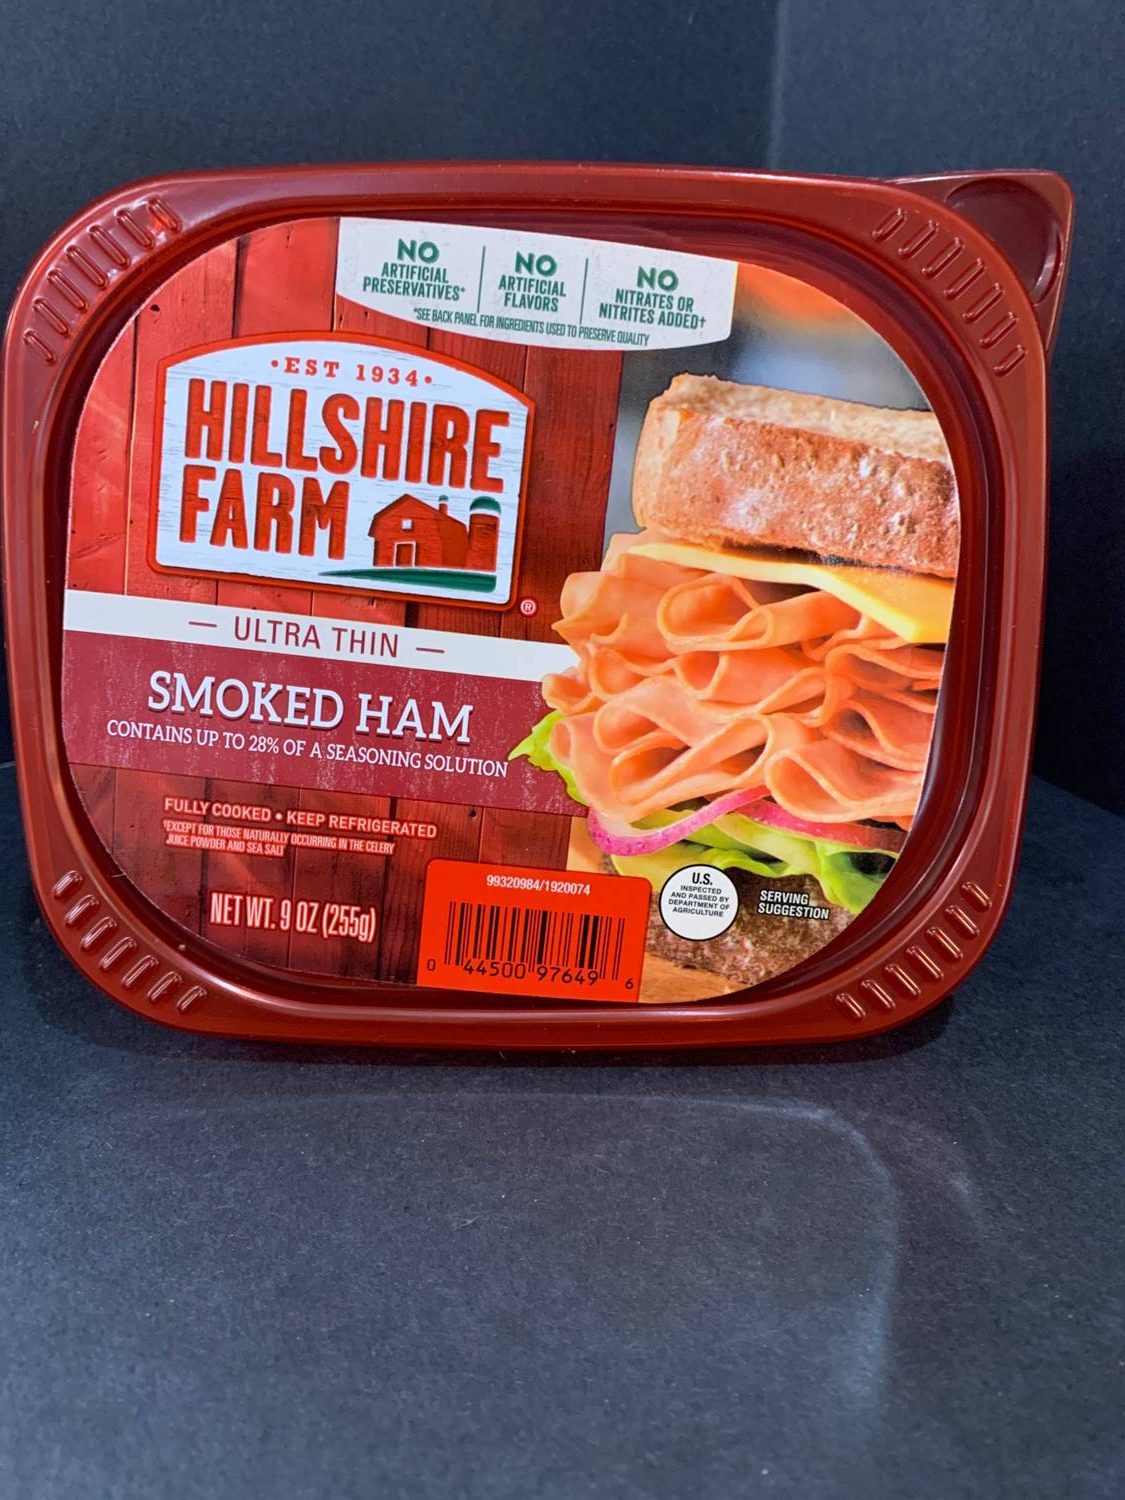 Smoked Ham slices